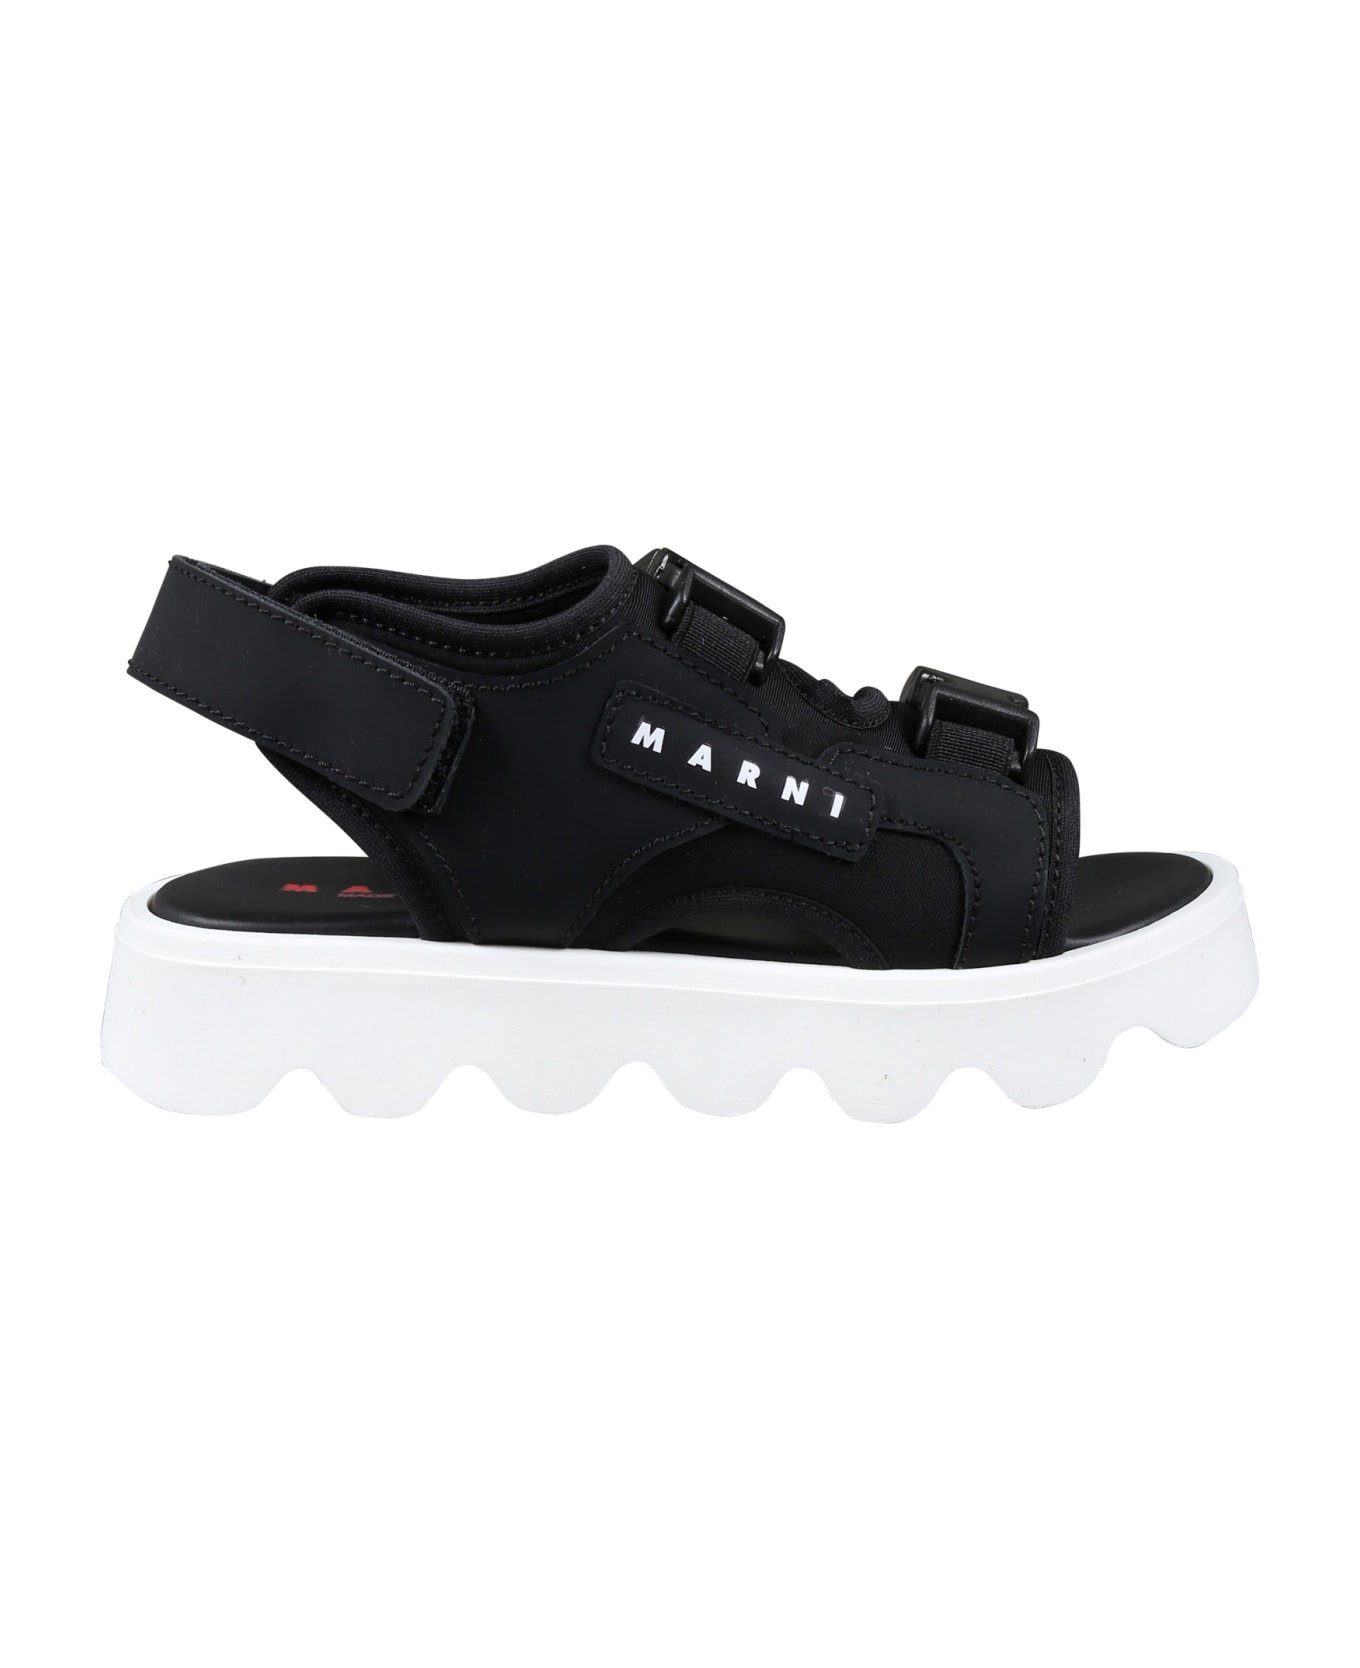 Marni Black Sandals For Girl With Logo - Black